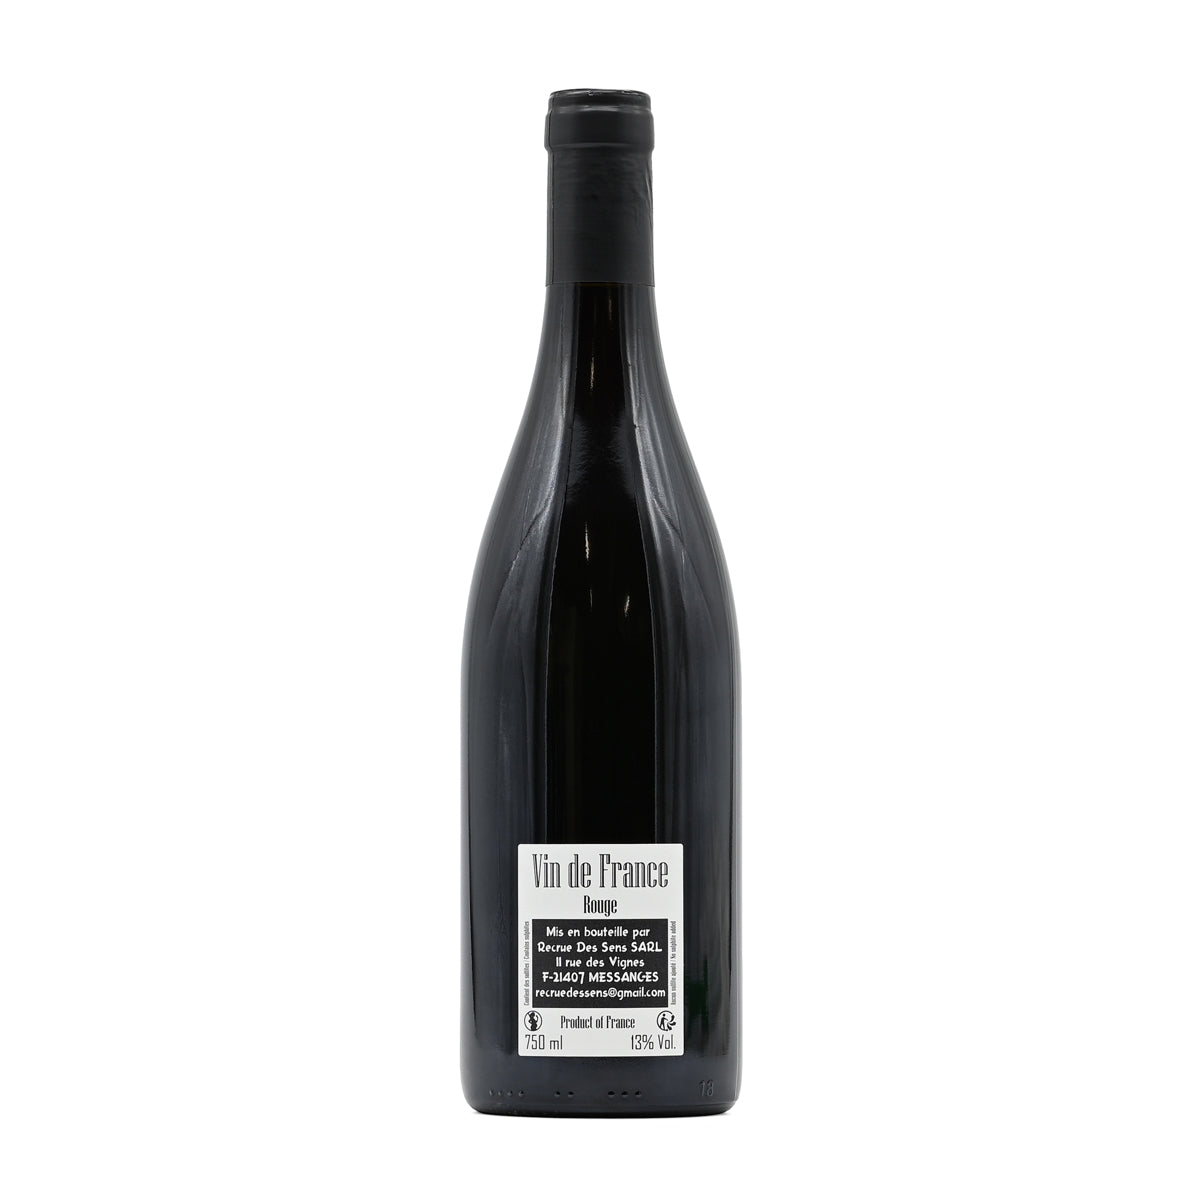 Yann Durieux VDF BT 2019, 750ml French red wine, made from Pinot Noir; Vin de France, from Recrue Des Sens, Burgundy, France – GDV Fine Wines, Hong Kong